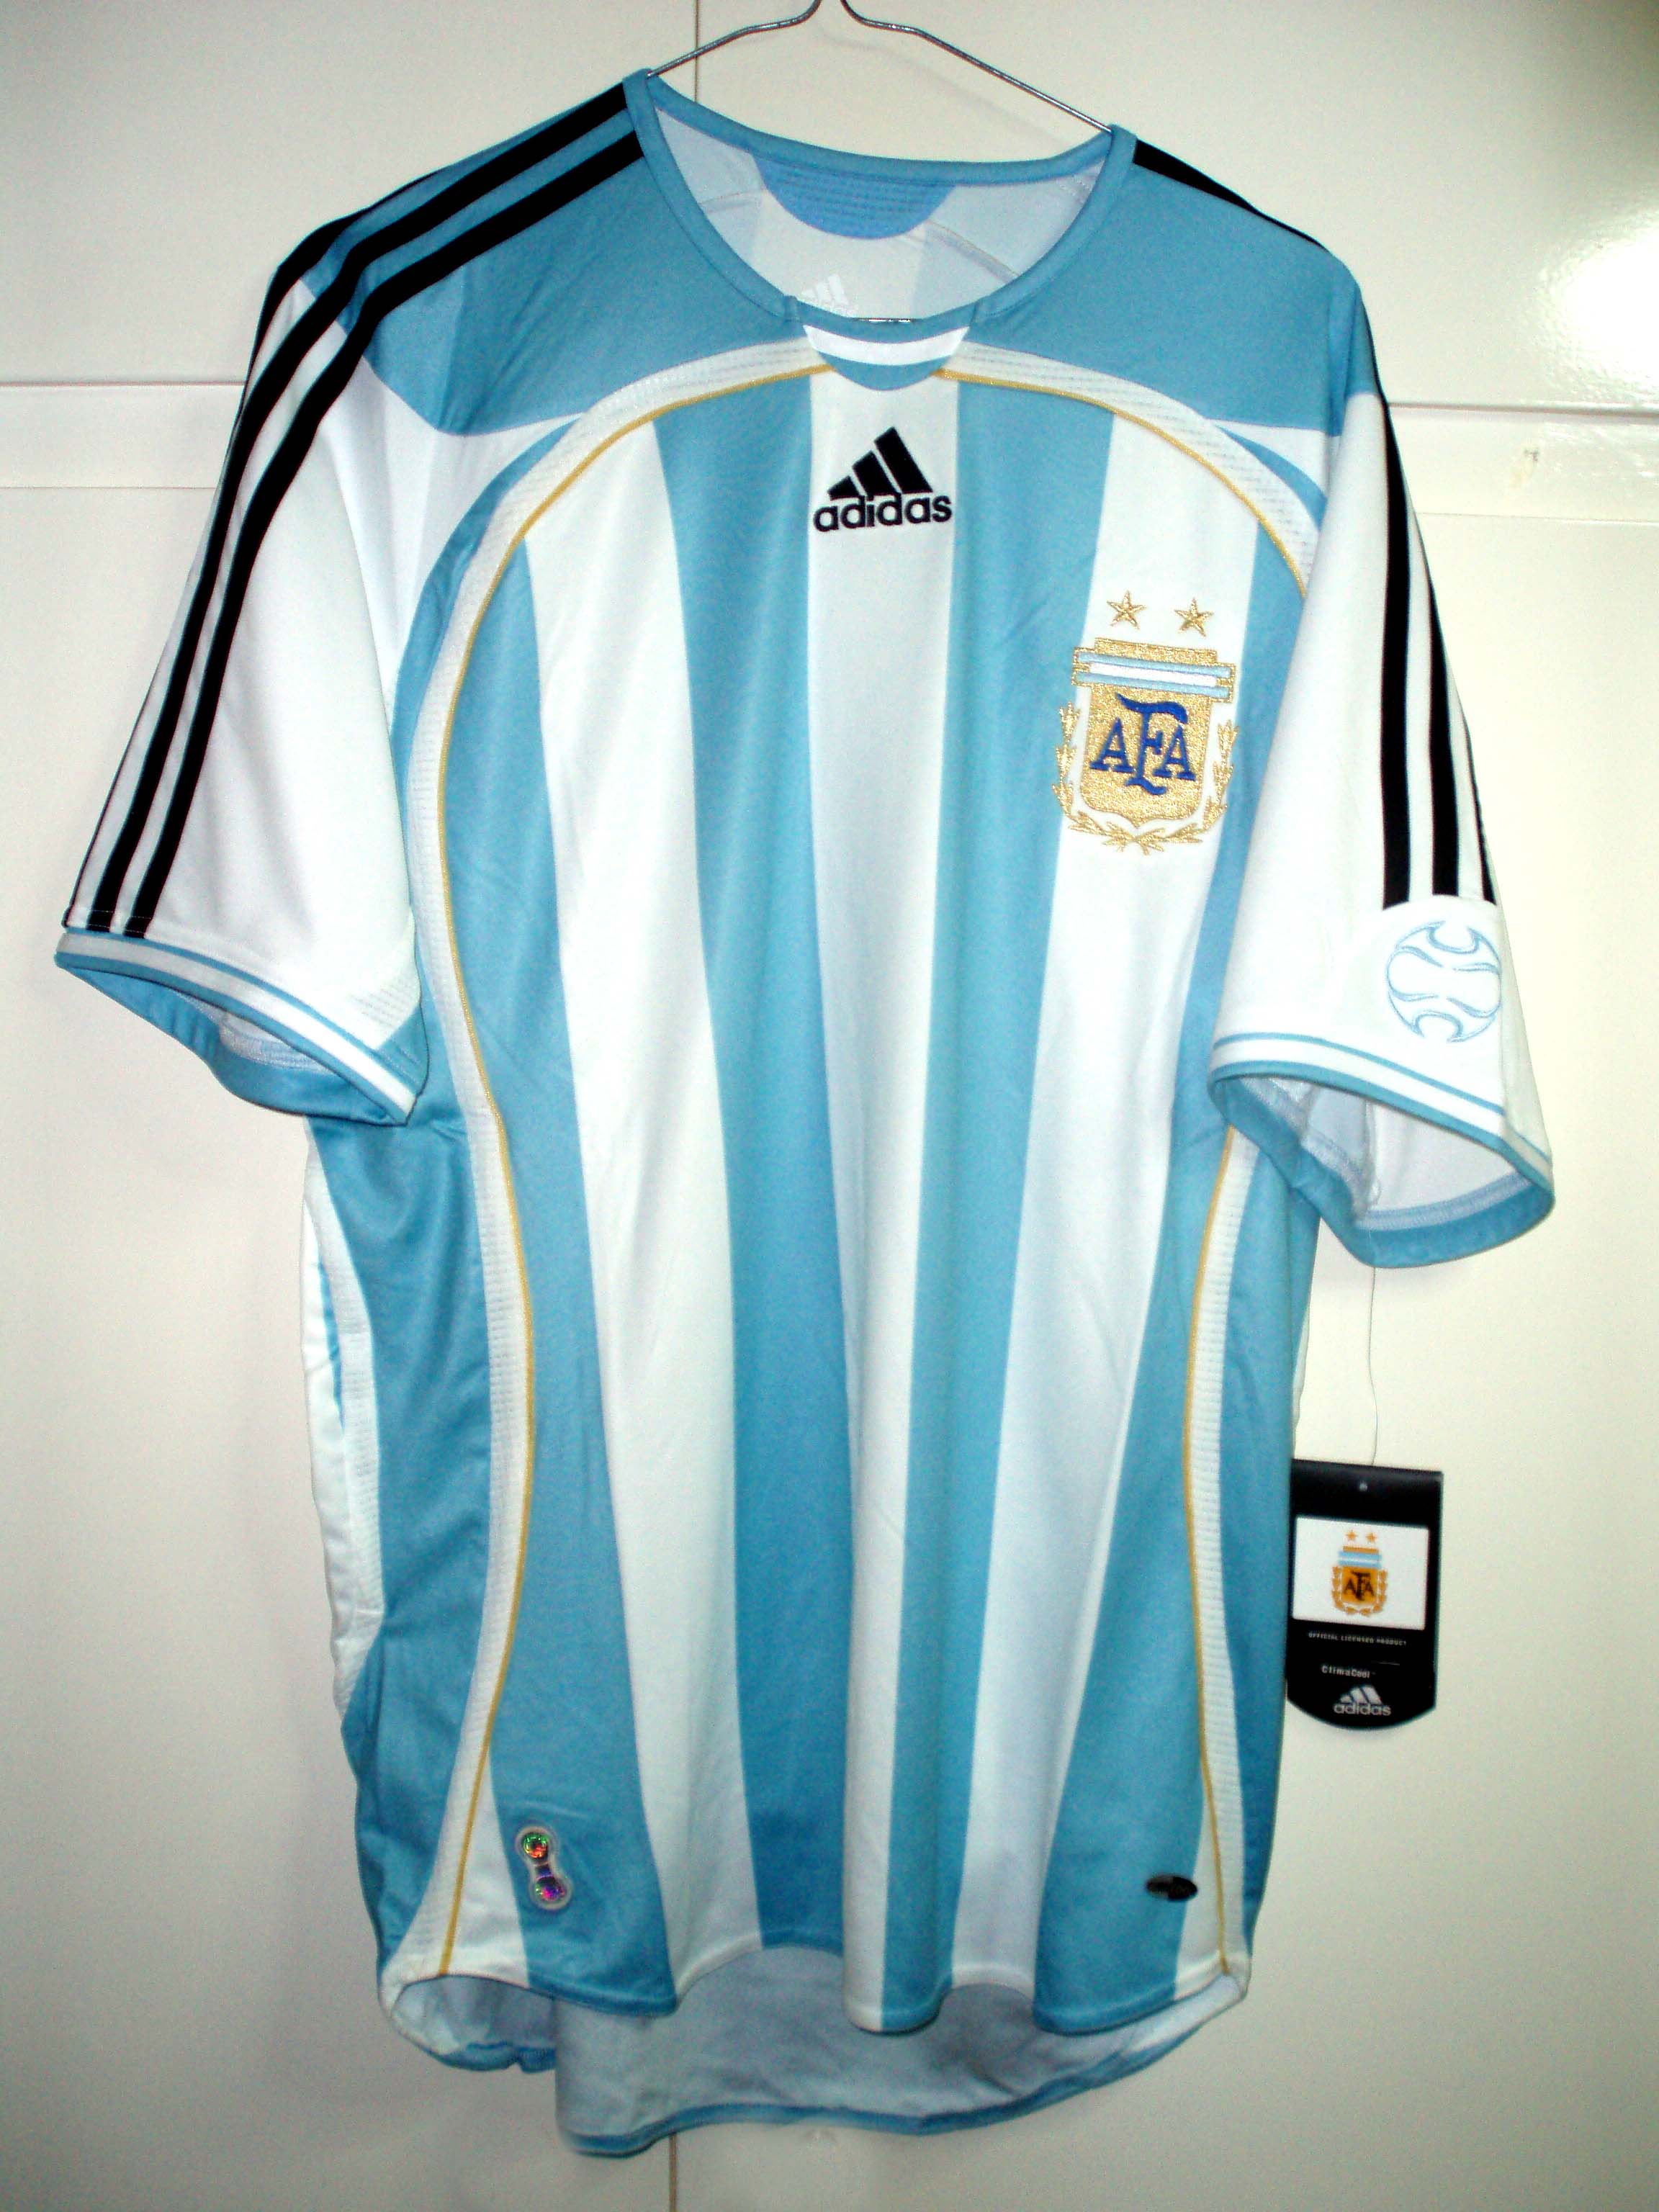 File:ArgentinaShirt2006WorldCup.jpg - Wikimedia Commons